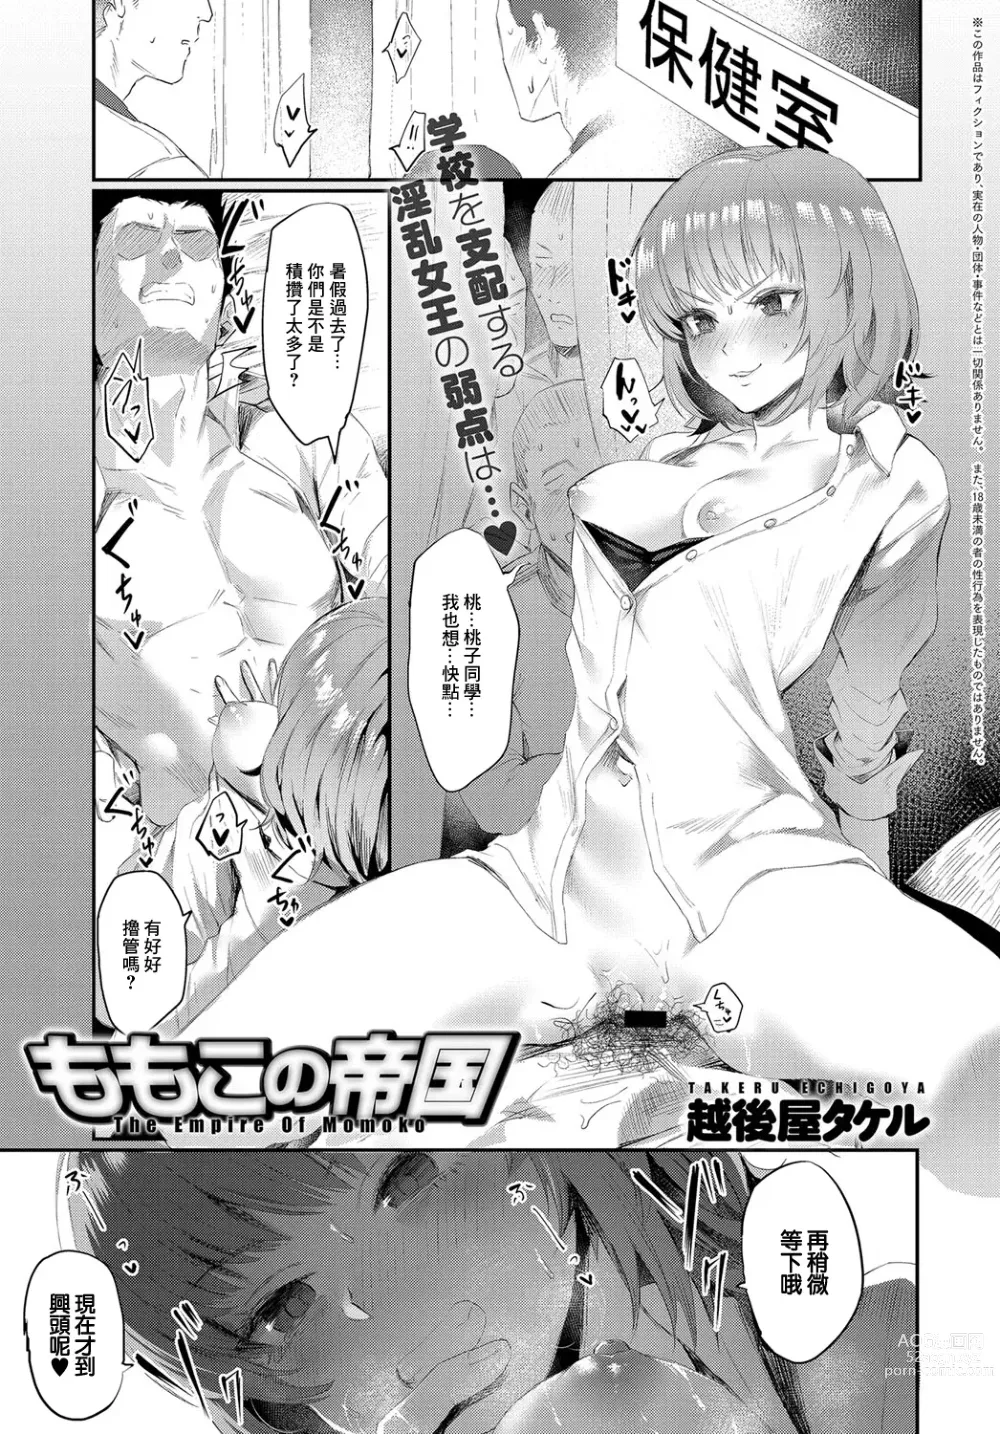 Page 1 of manga Momoko no teikoku - The Empire Of Momoko